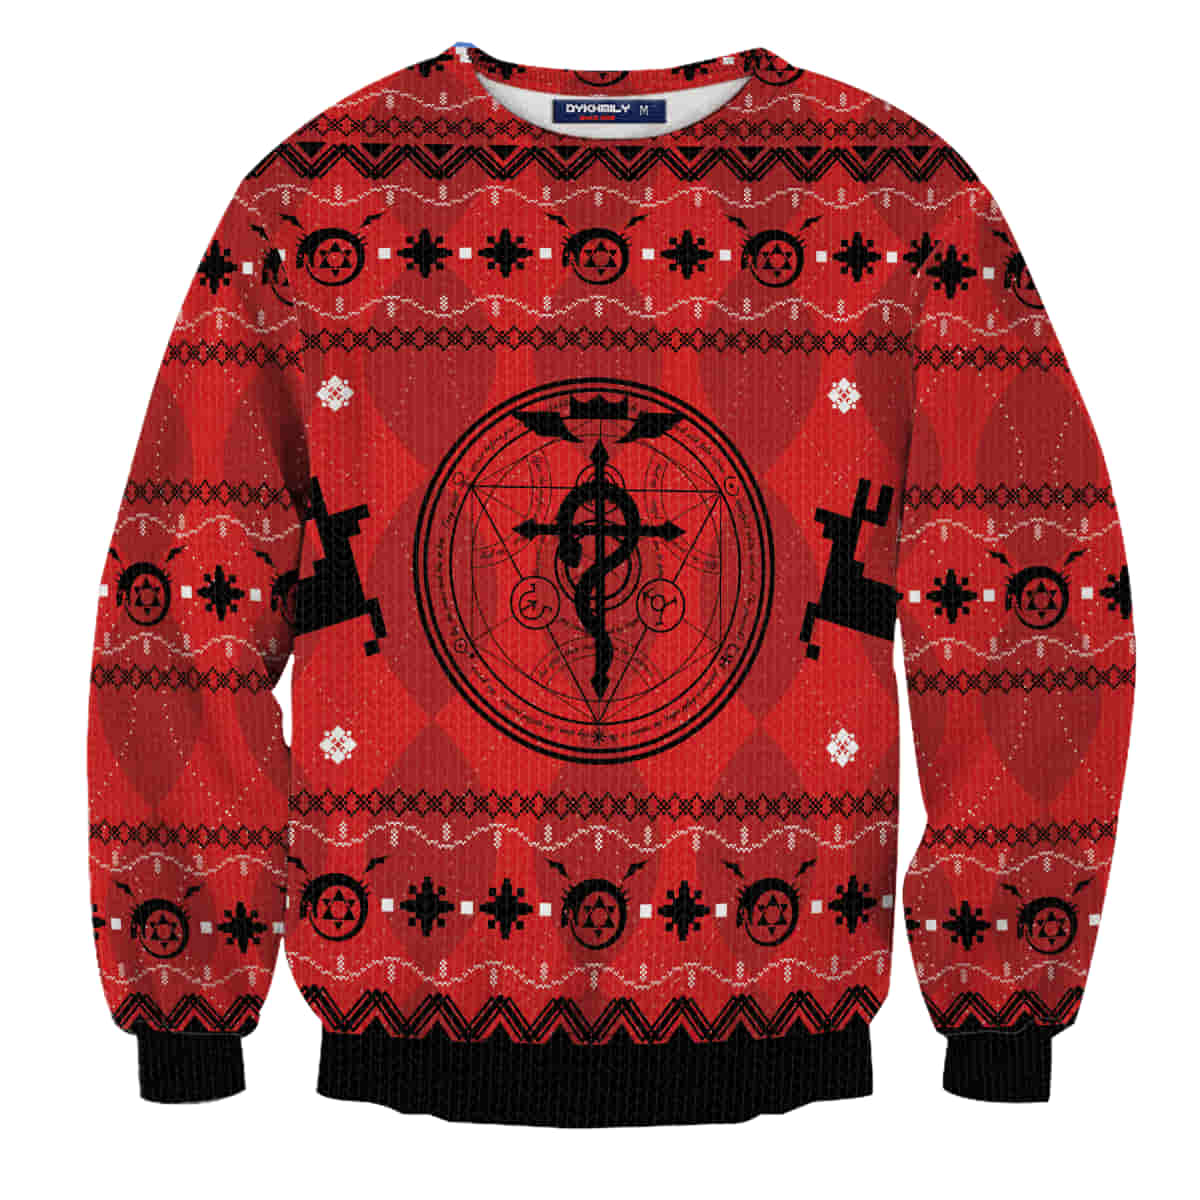 Fullmetal Alchemist Christmas Wool Knitted Sweater